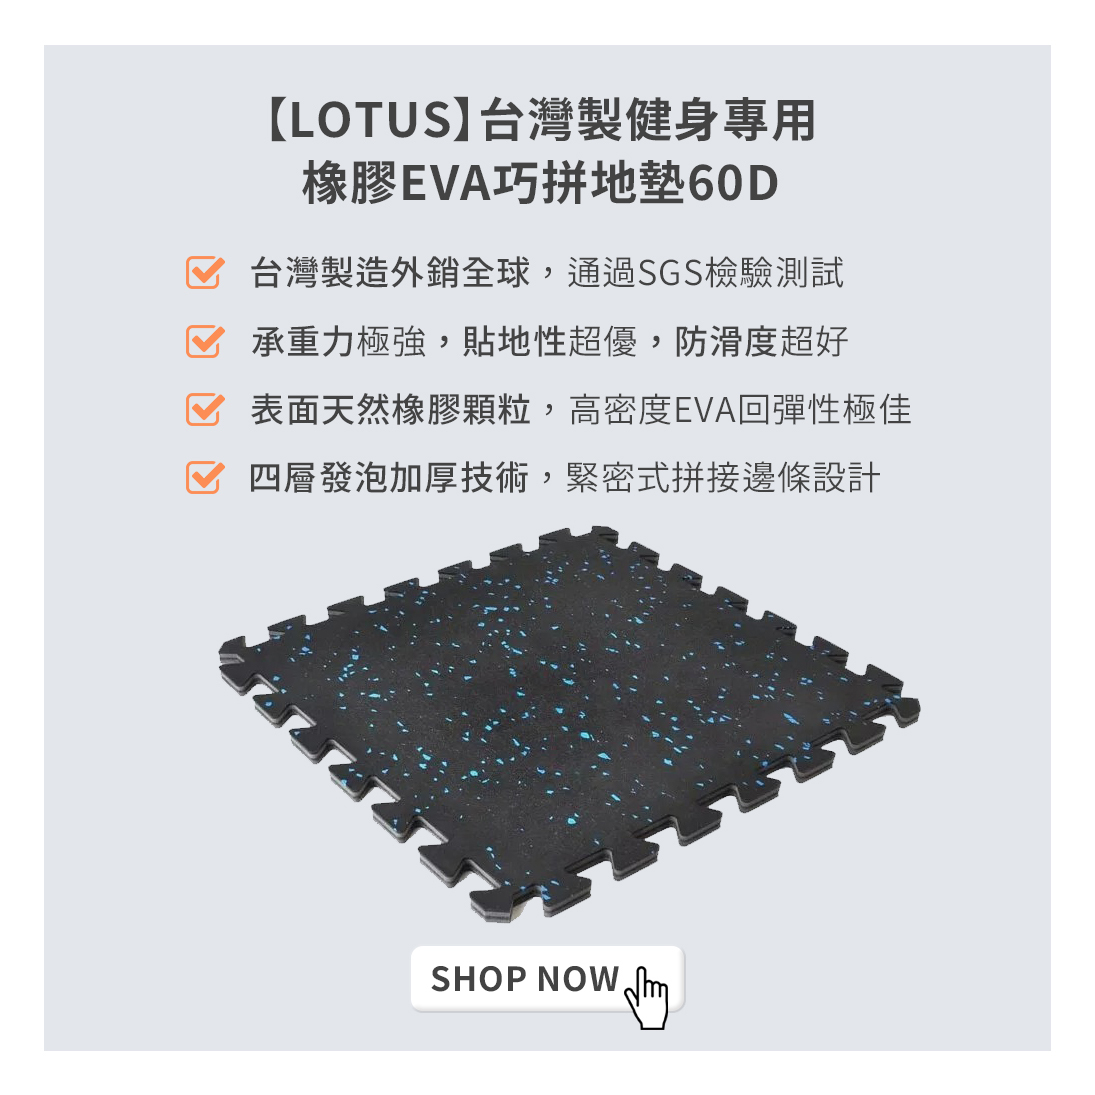 LOTUS台灣製健身專用橡膠地墊，市面上罕見的四層發泡加厚技術，可承受器材重量，緊密是拼接邊條設計，大小自由鋪設